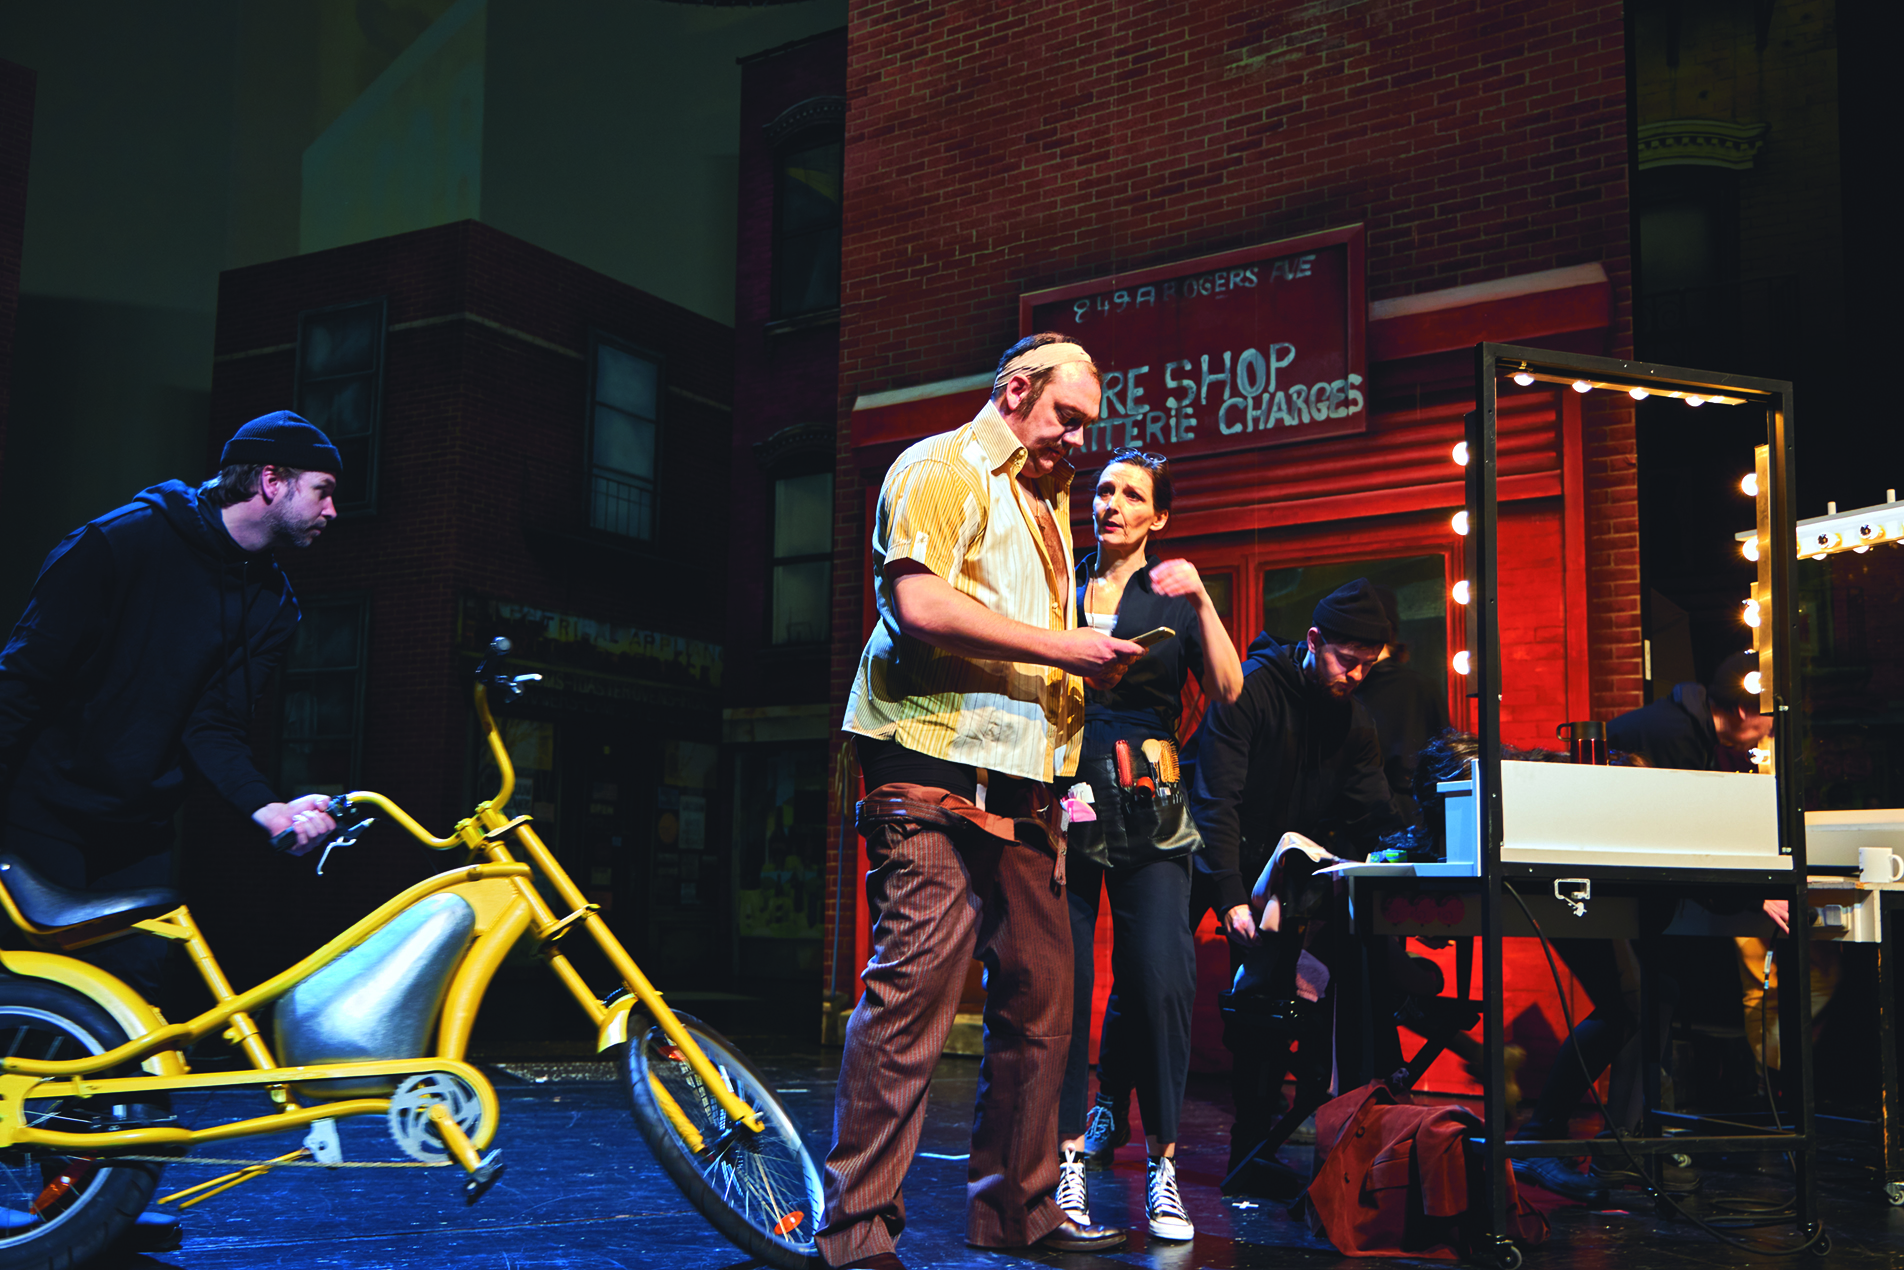 Szene aus Coolhaze: Charly Hübner im Kostüm neben einem Motorrad